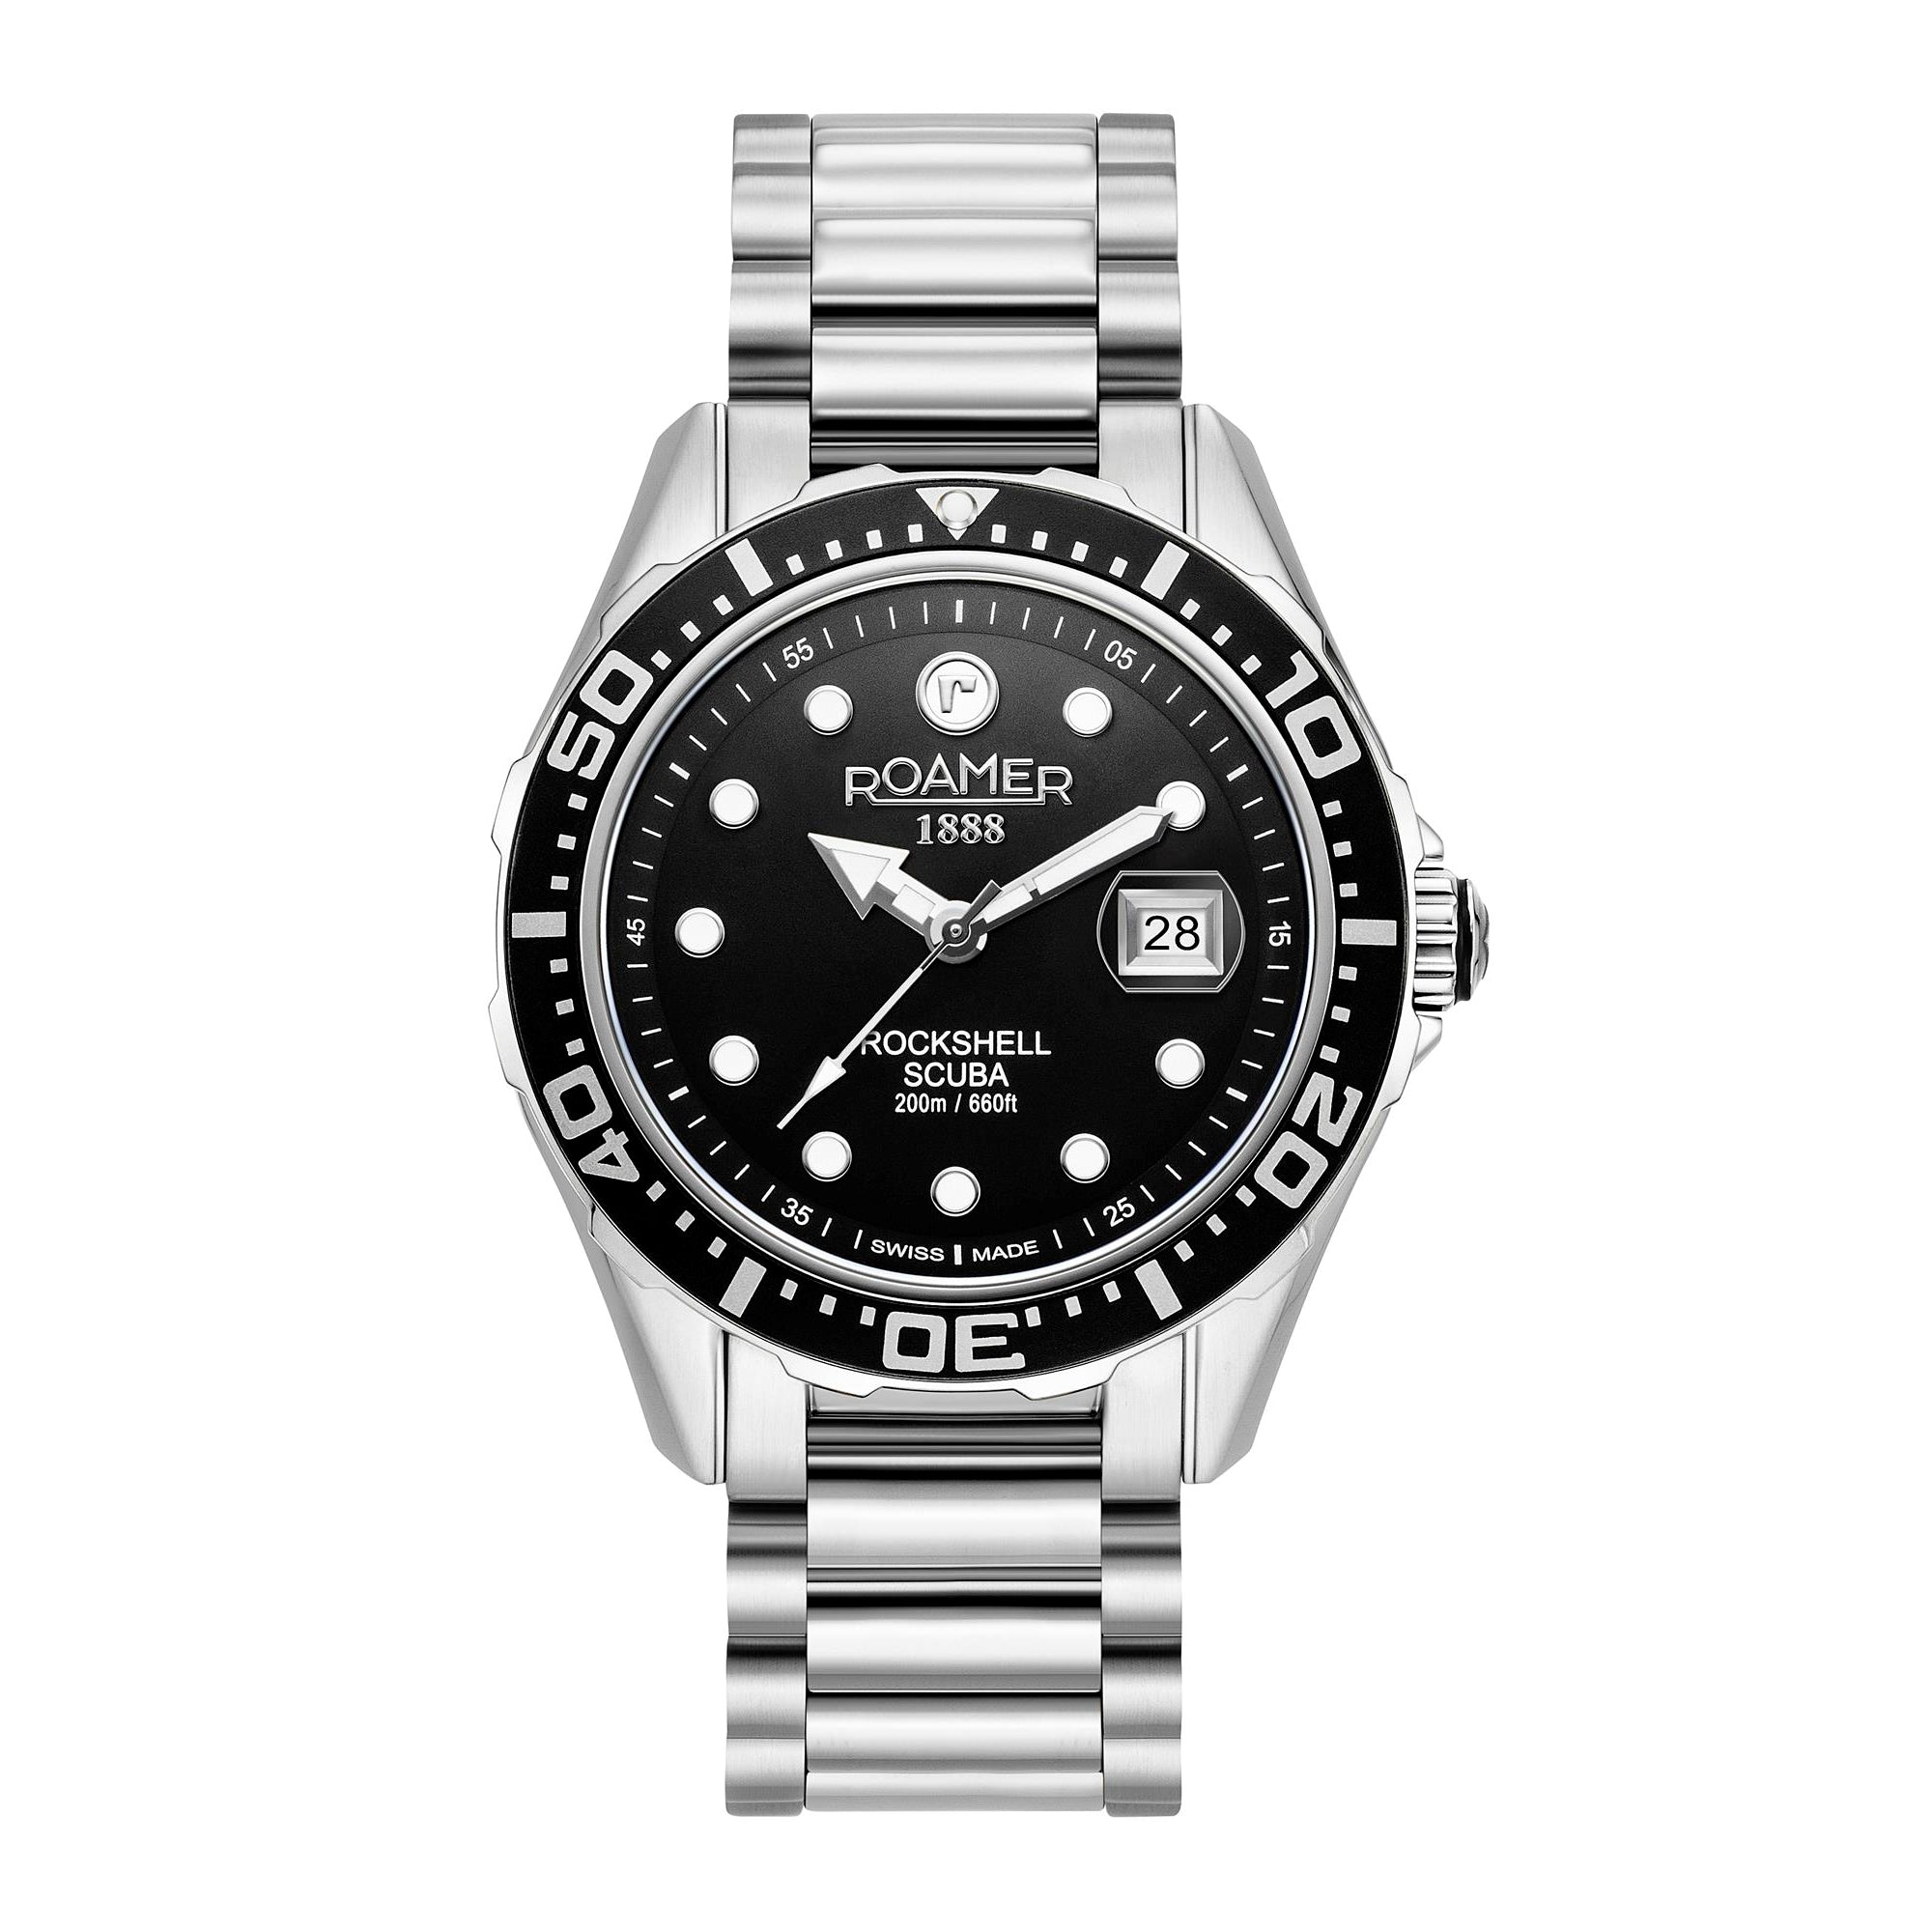 Photos - Wrist Watch Roamer 220858 41 85 50 Rockshell Mark III Scuba Black Dial Wristwatch 